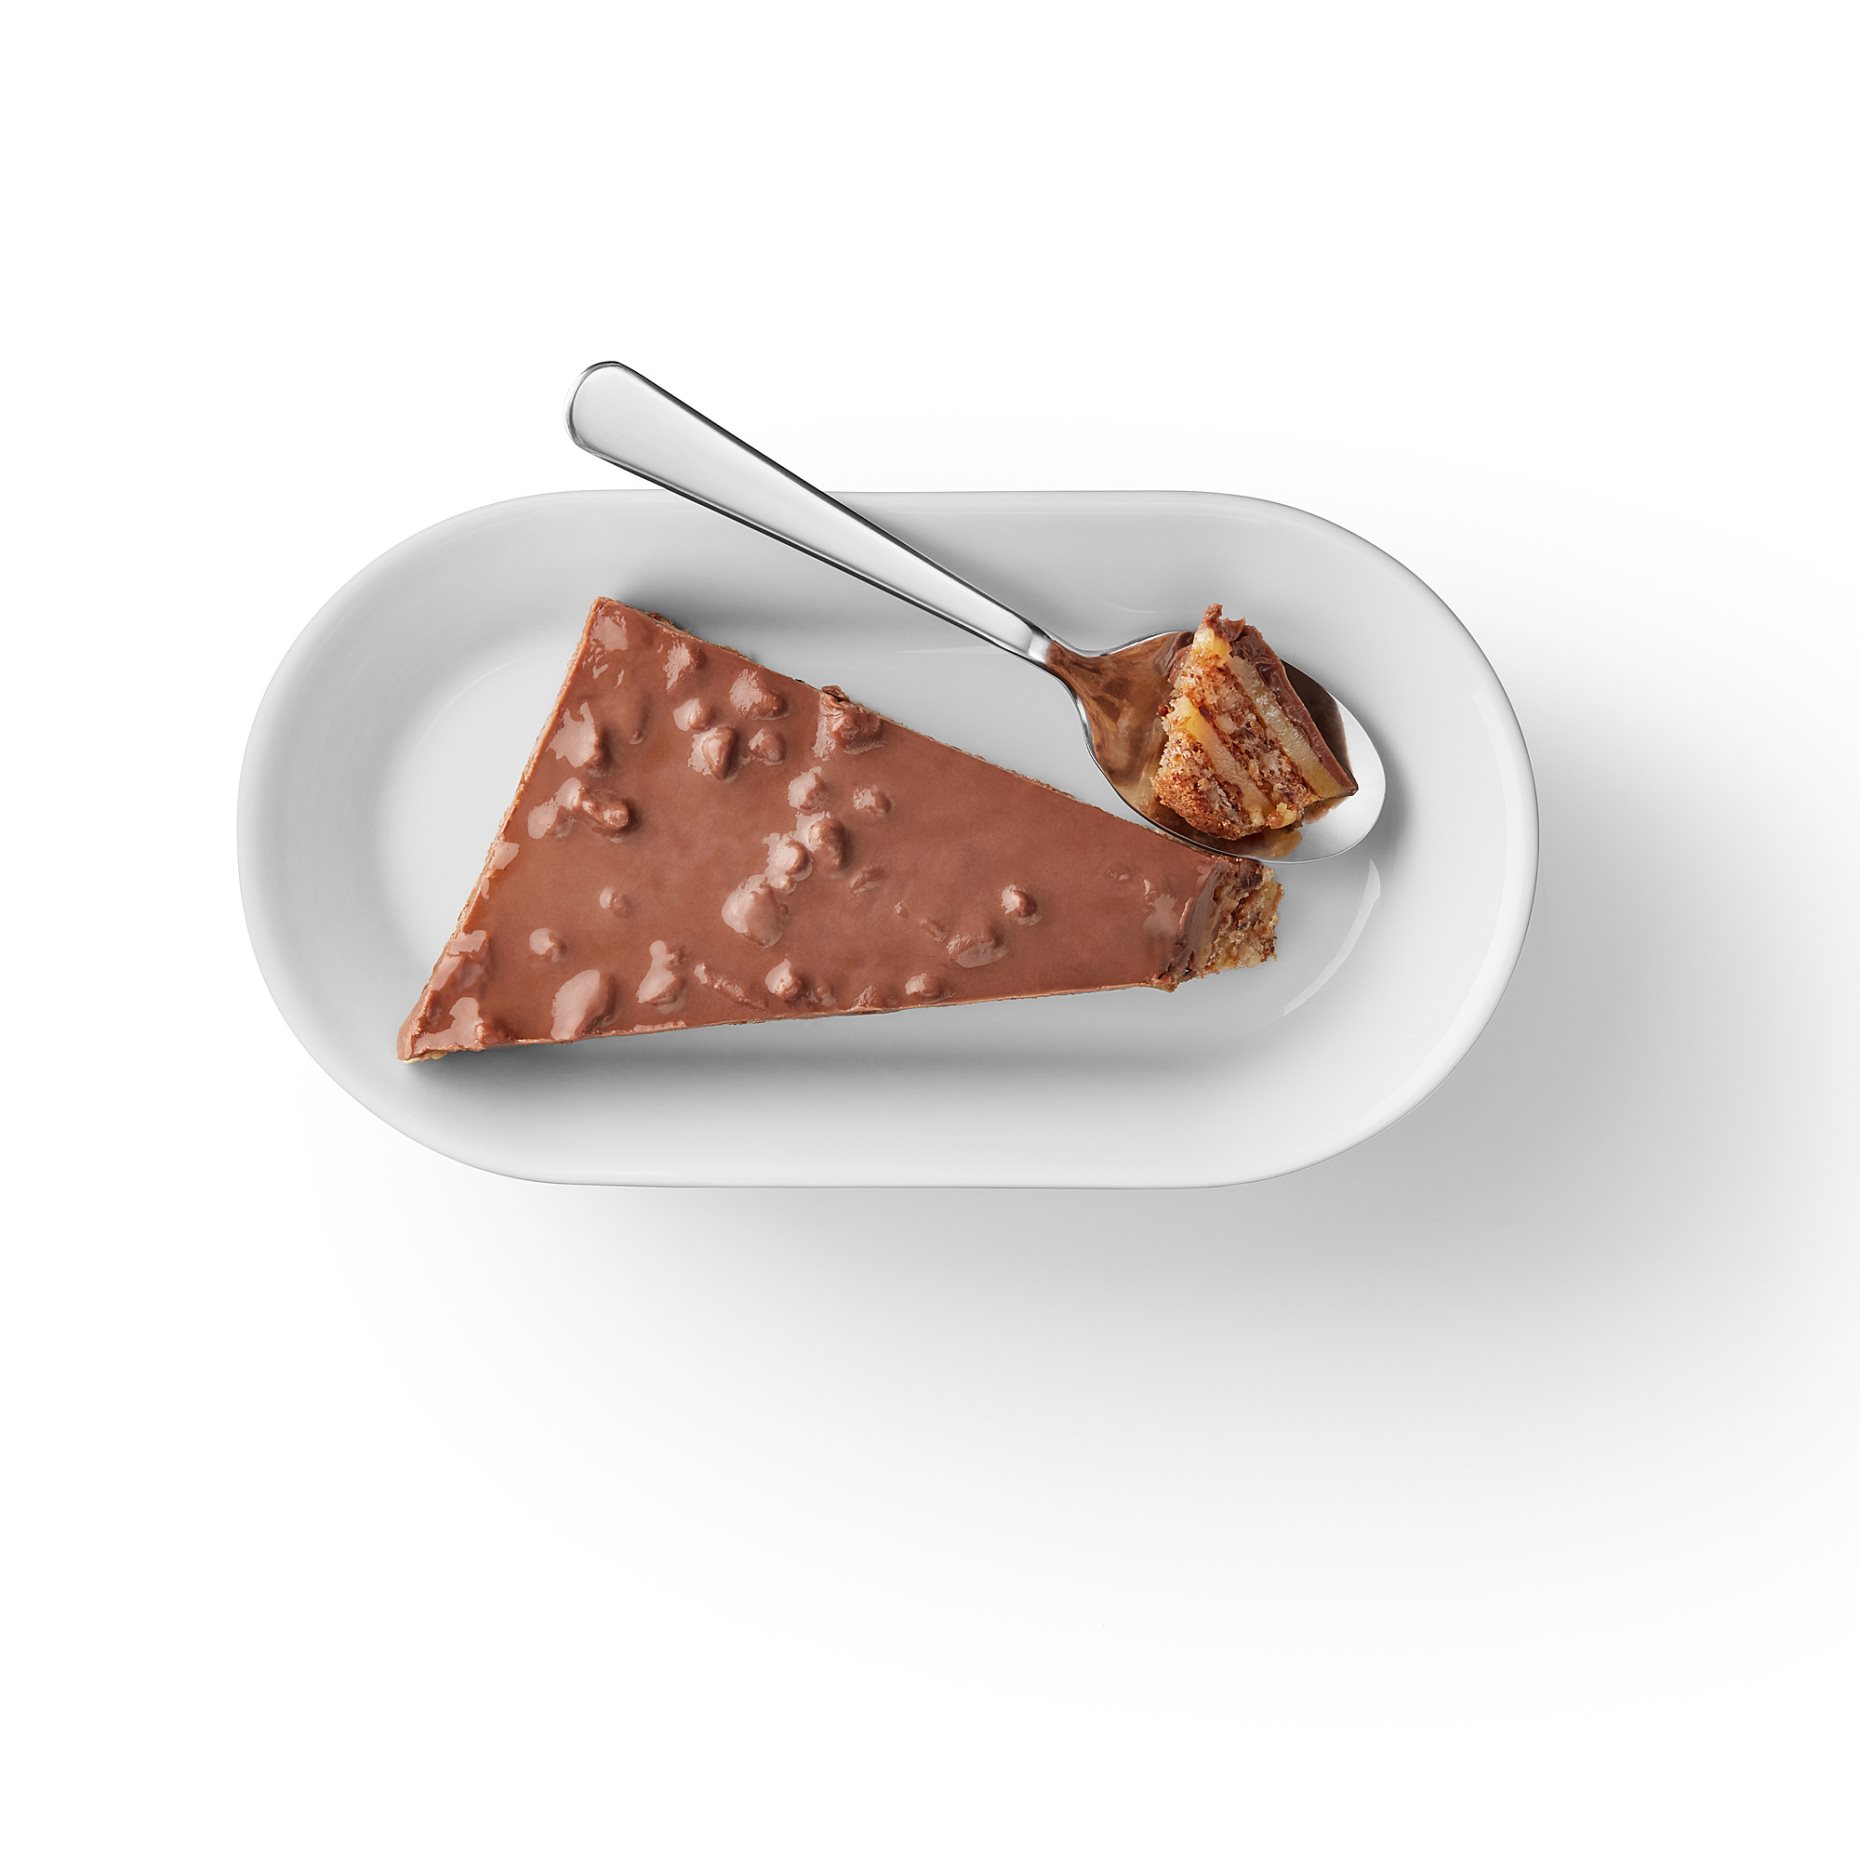 DAIM, κέικ με σοκολάτα και αμύγδαλα, κτψ., 400 g, 203.476.27